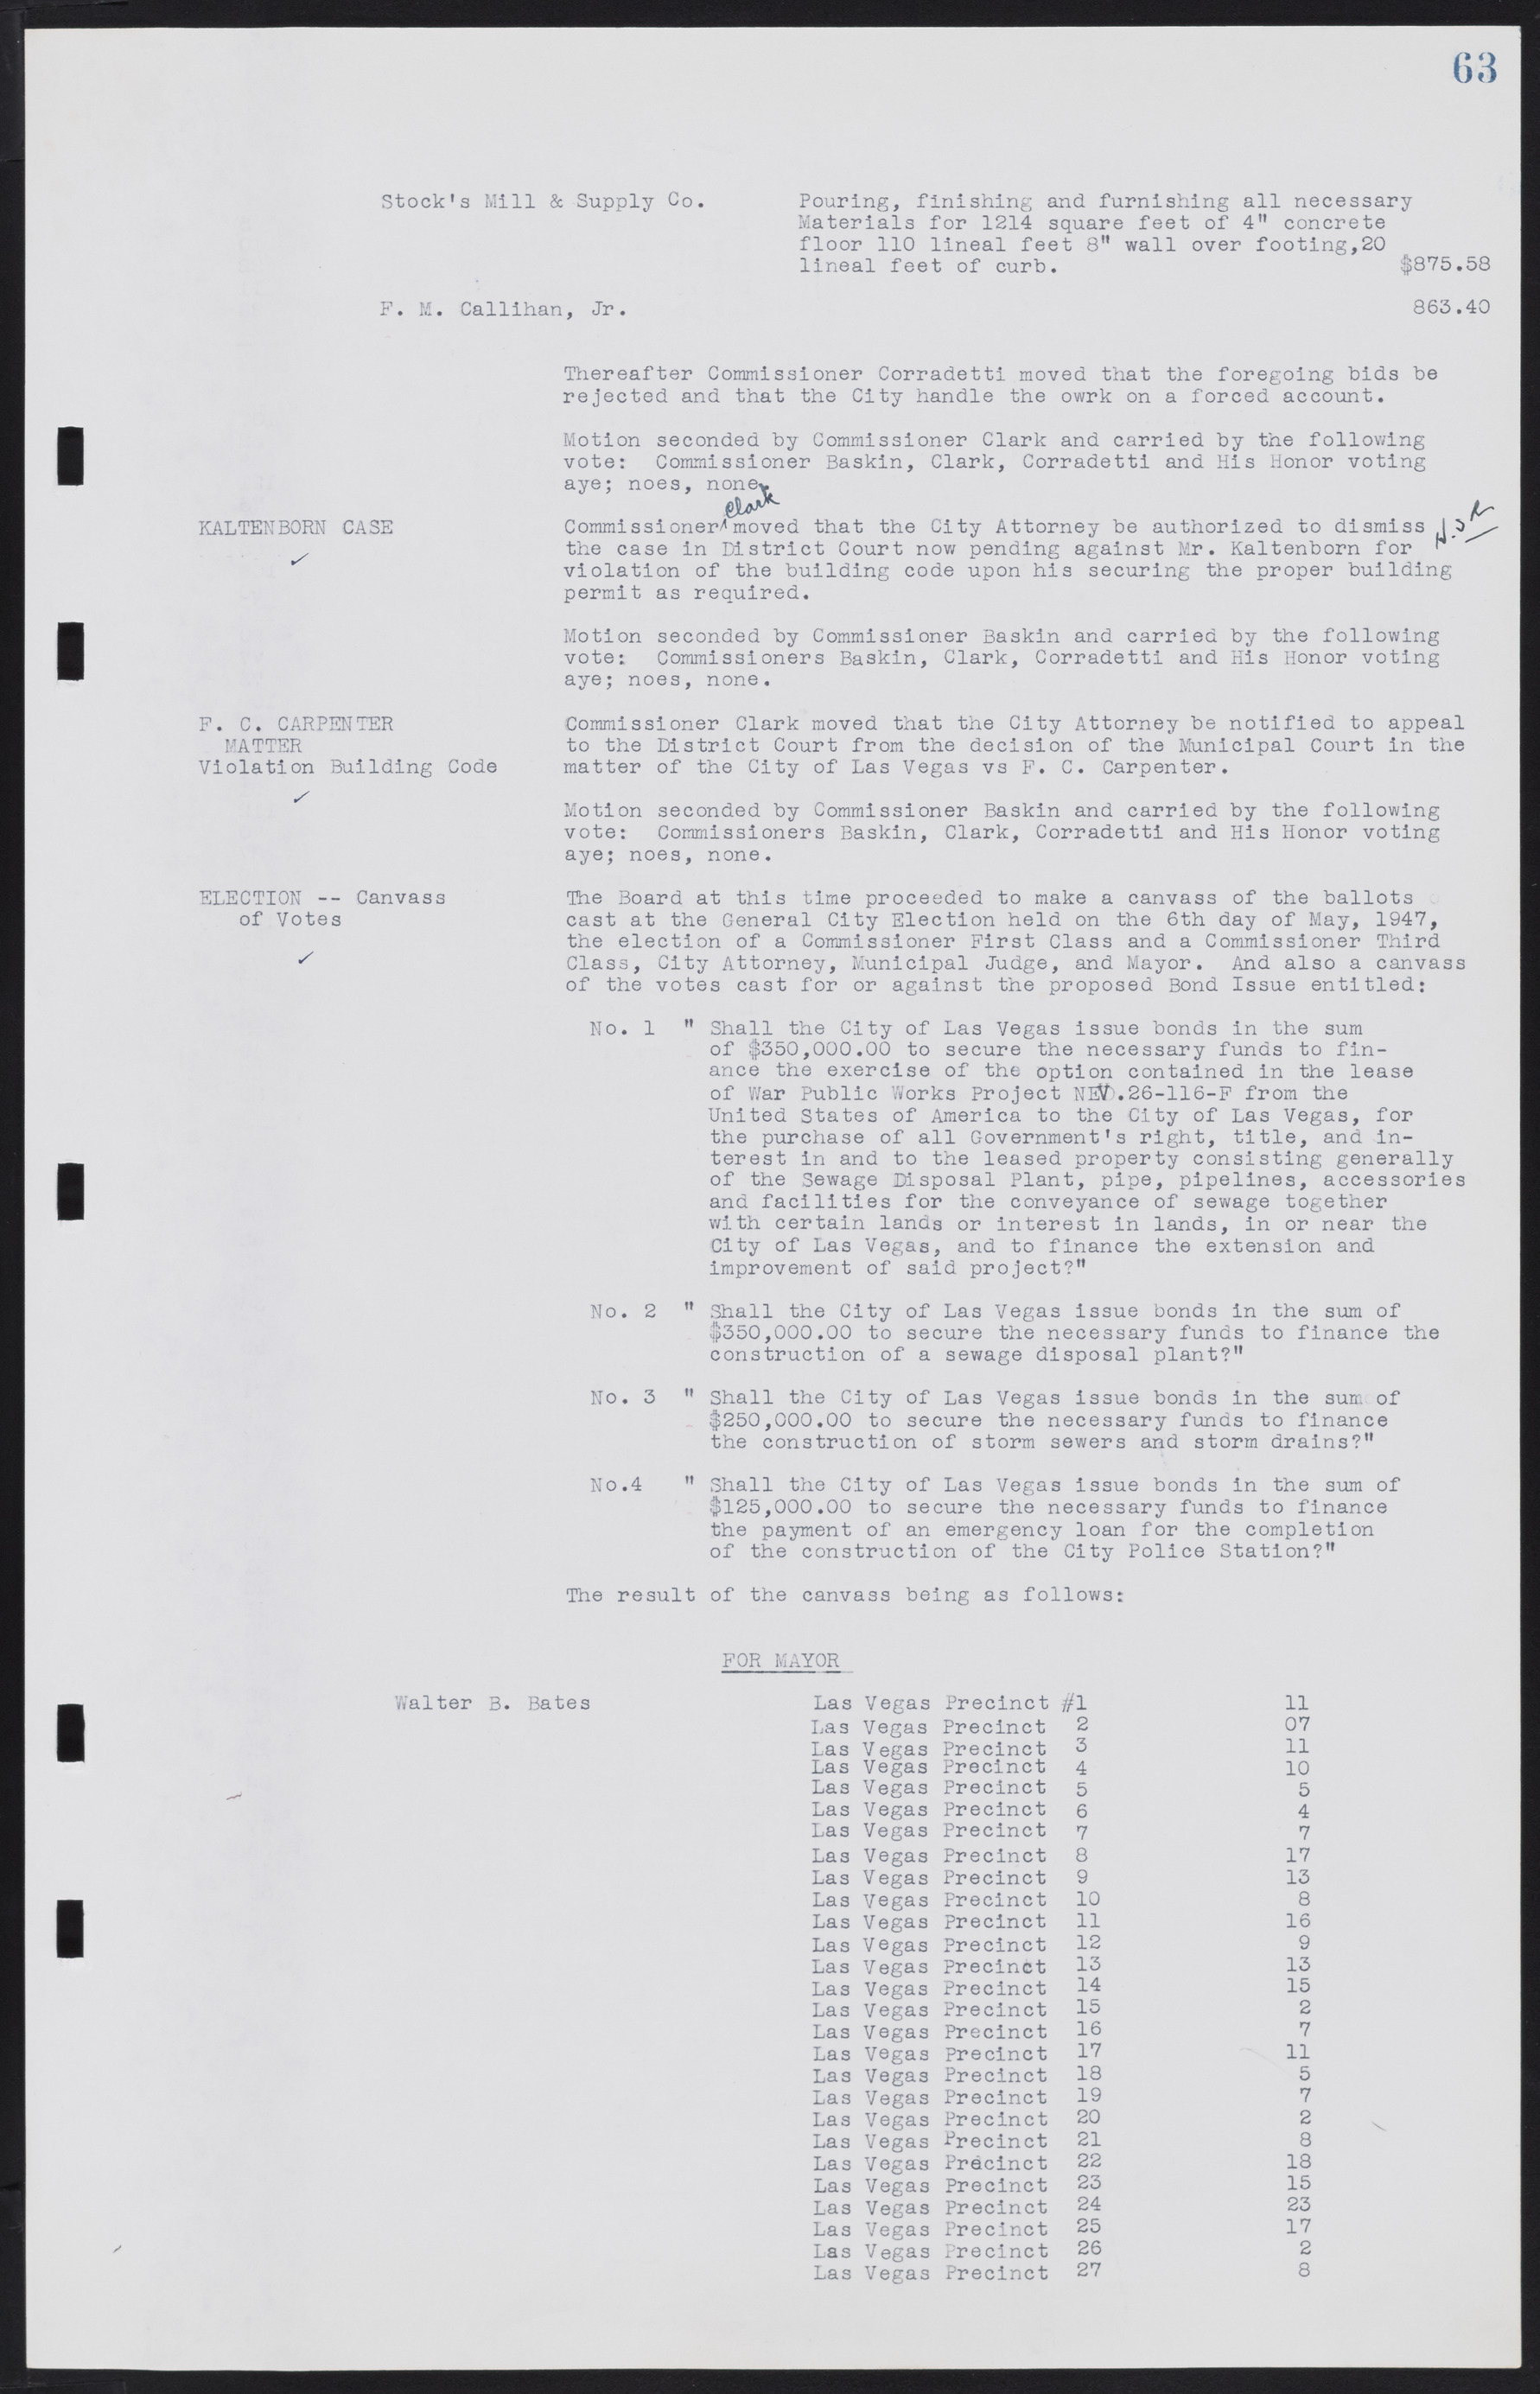 Las Vegas City Commission Minutes, January 7, 1947 to October 26, 1949, lvc000006-78